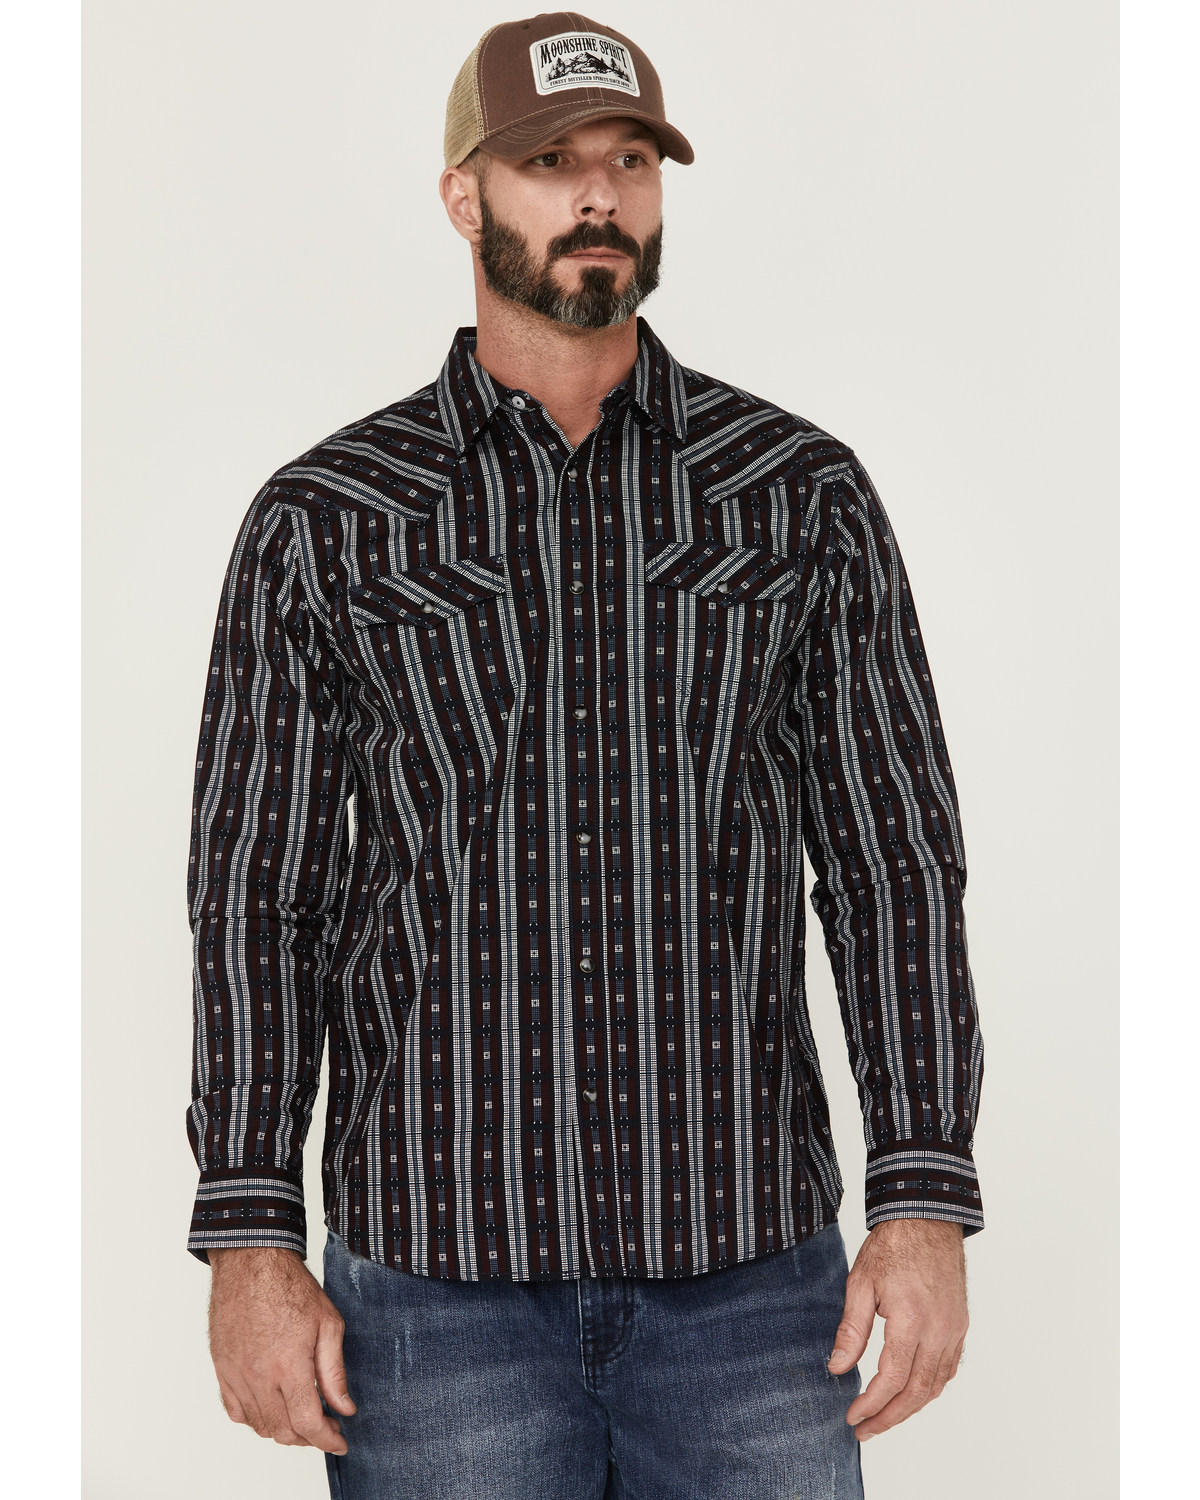 Moonshine Spirit Men's Otoe Stripe Long Sleeve Snap Western Shirt